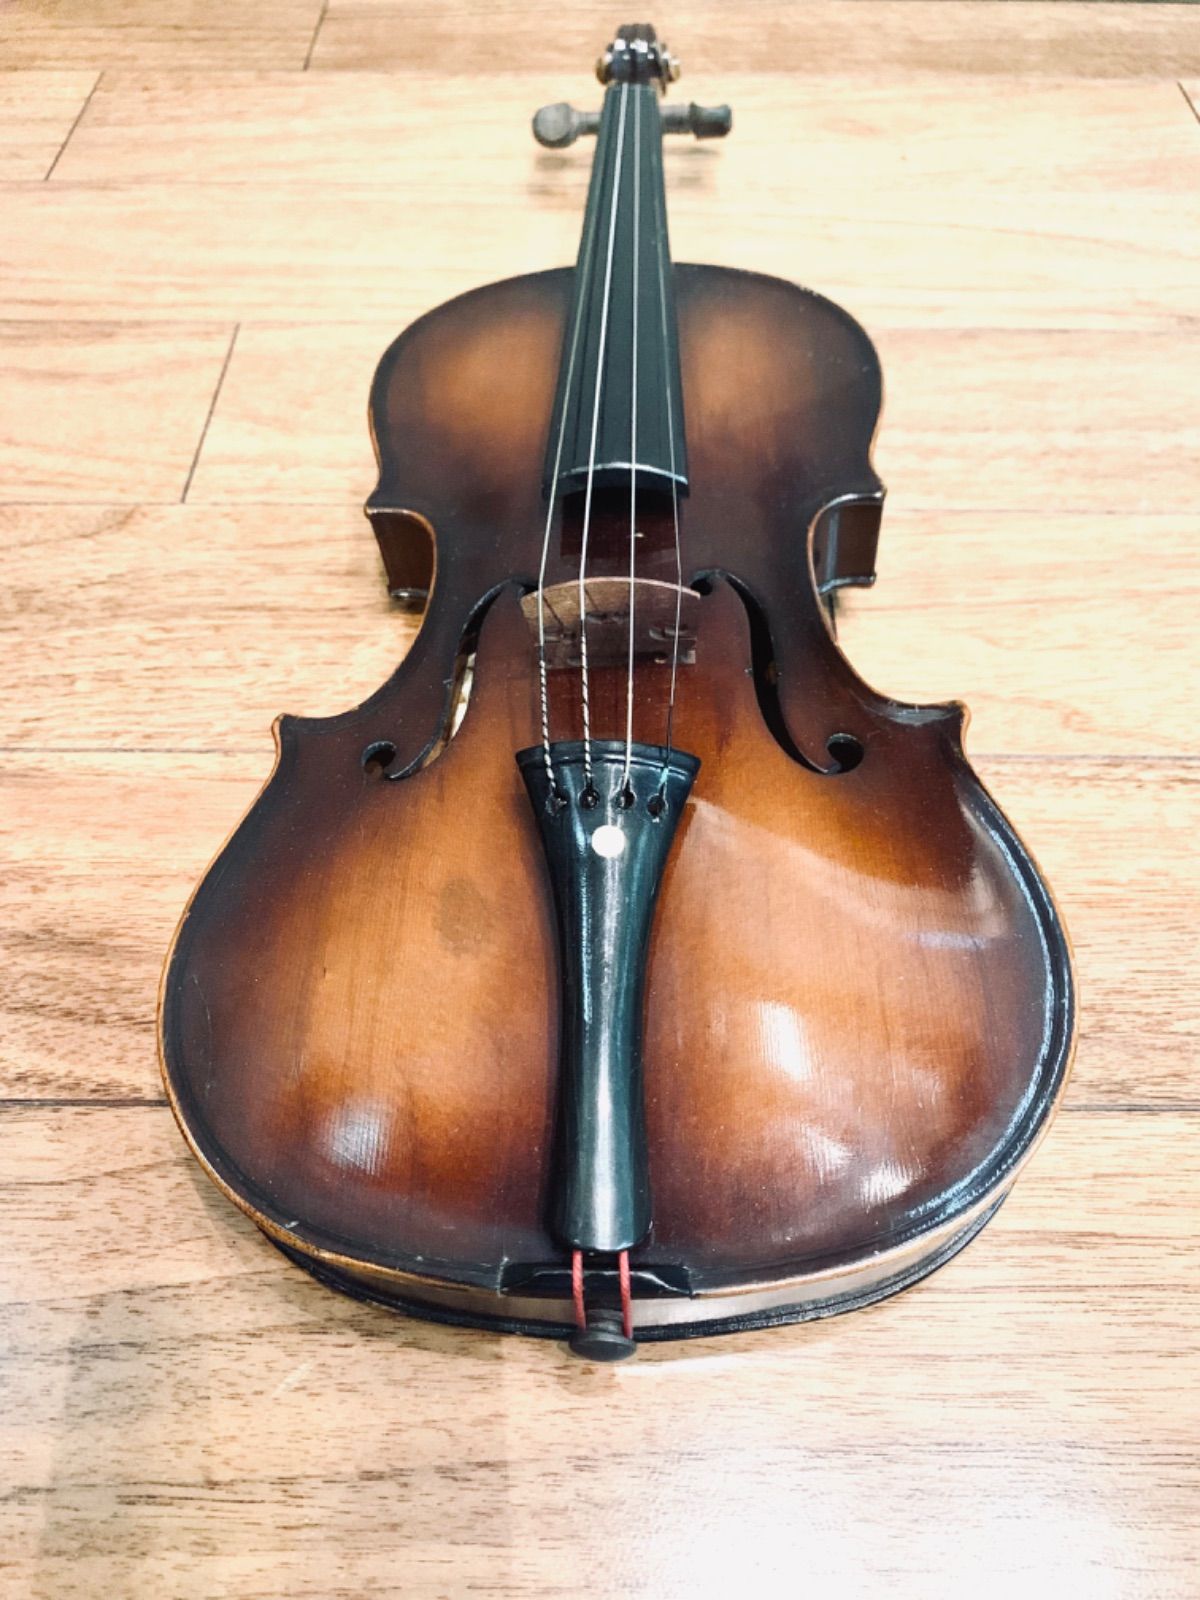 Suzuki バイオリン ヴィンテージ No.11 1/2 1887年